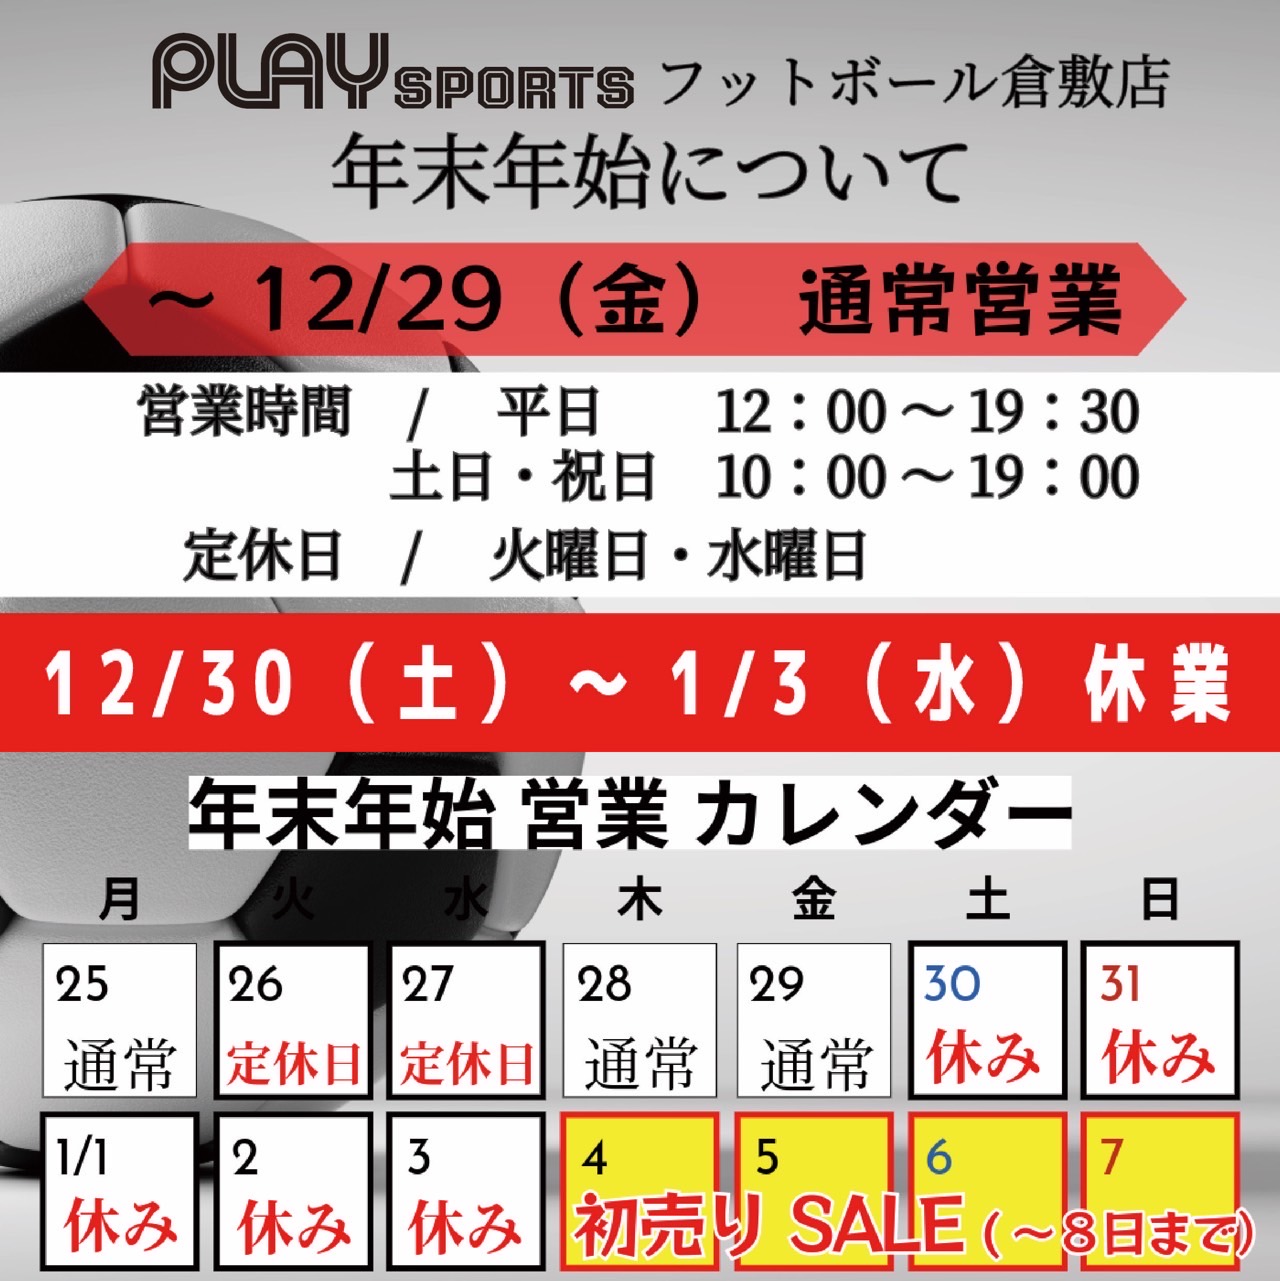 http://www.playsports.jp/news/images/IMG_6122.jpeg